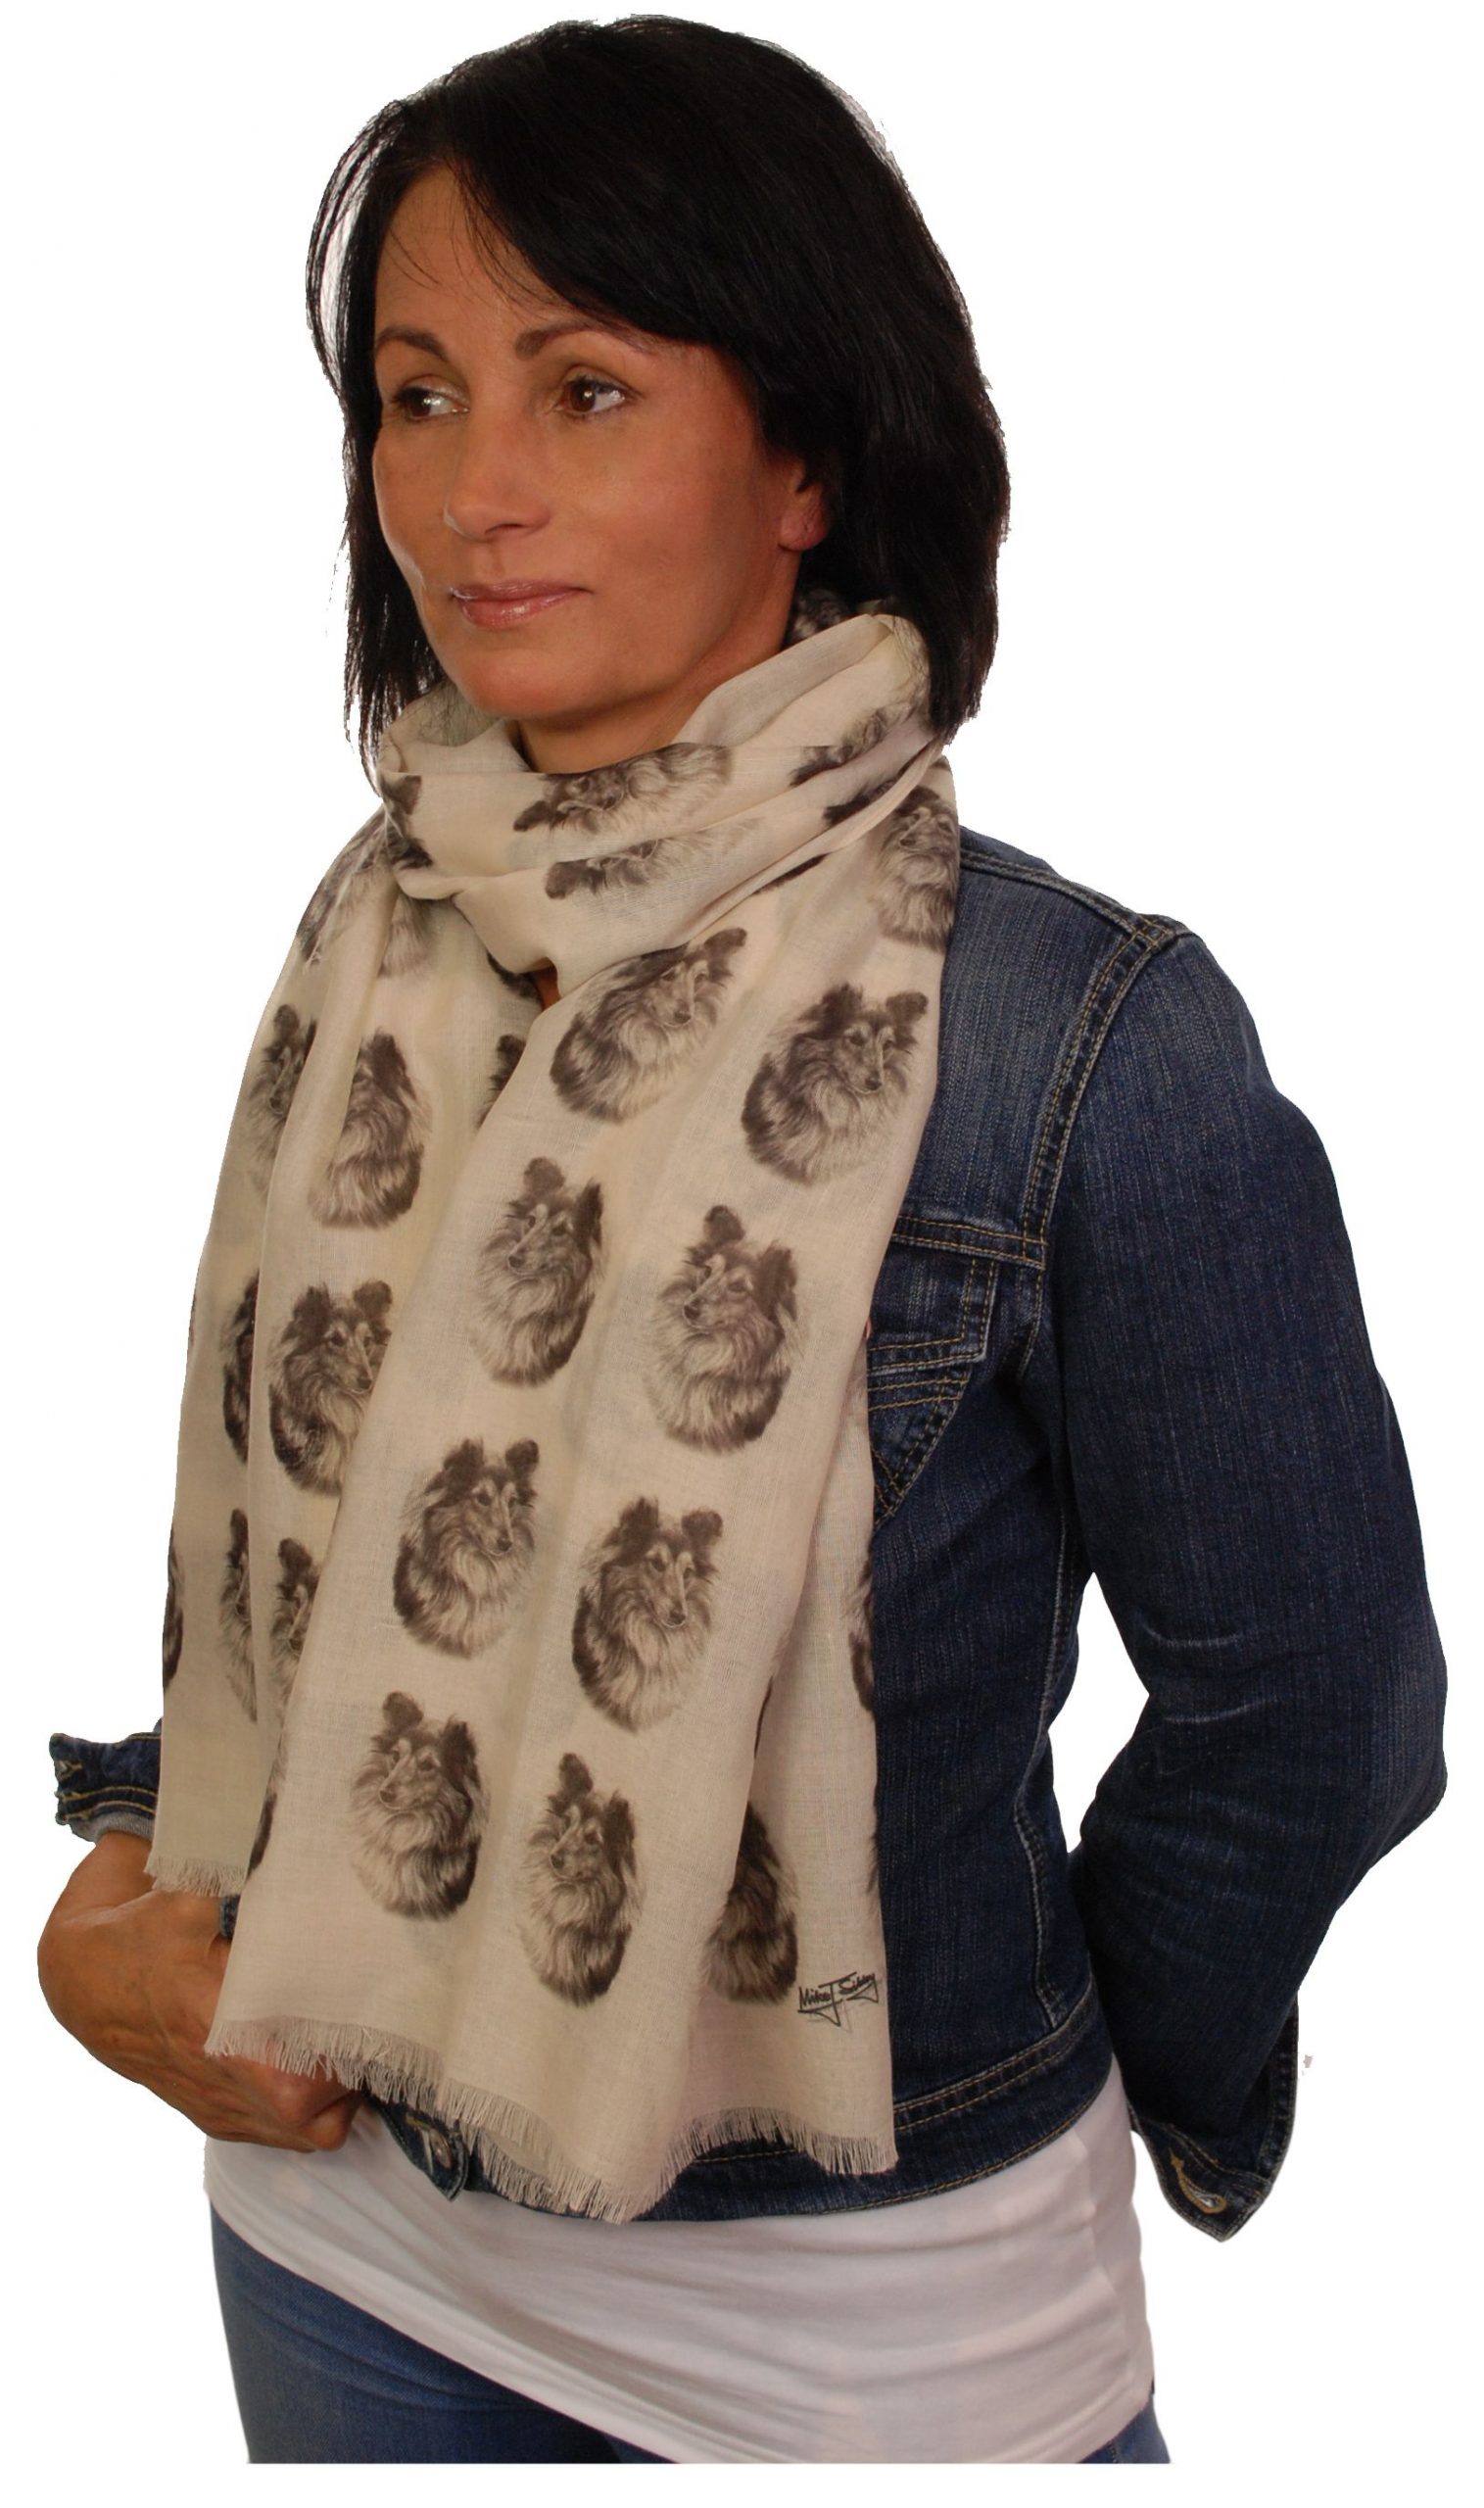 Mike Sibley Shetland Sheepdog licensed design ladies fashion scarf